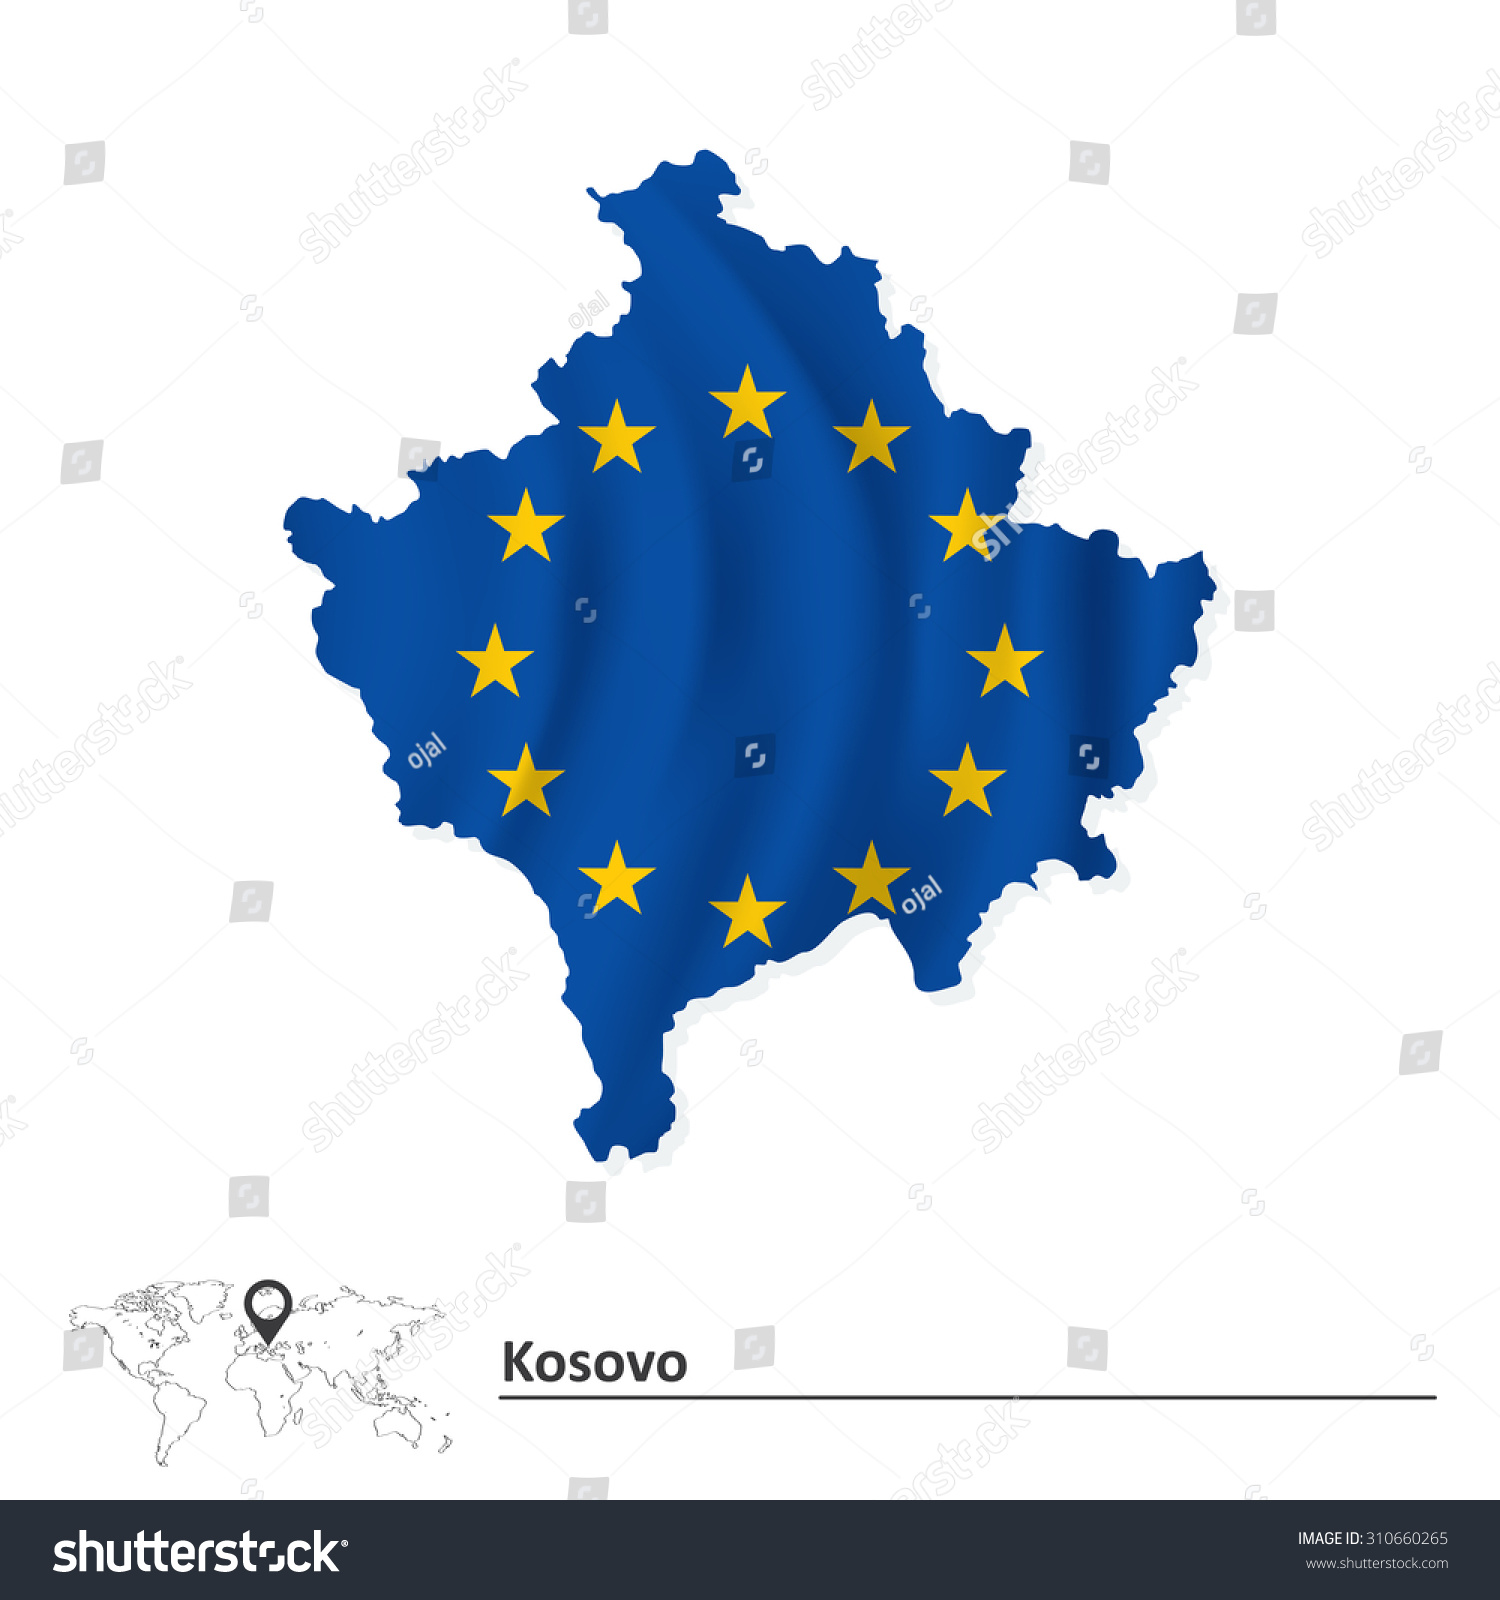 Map Of Kosovo With European Union Flag - Vector Illustration ...